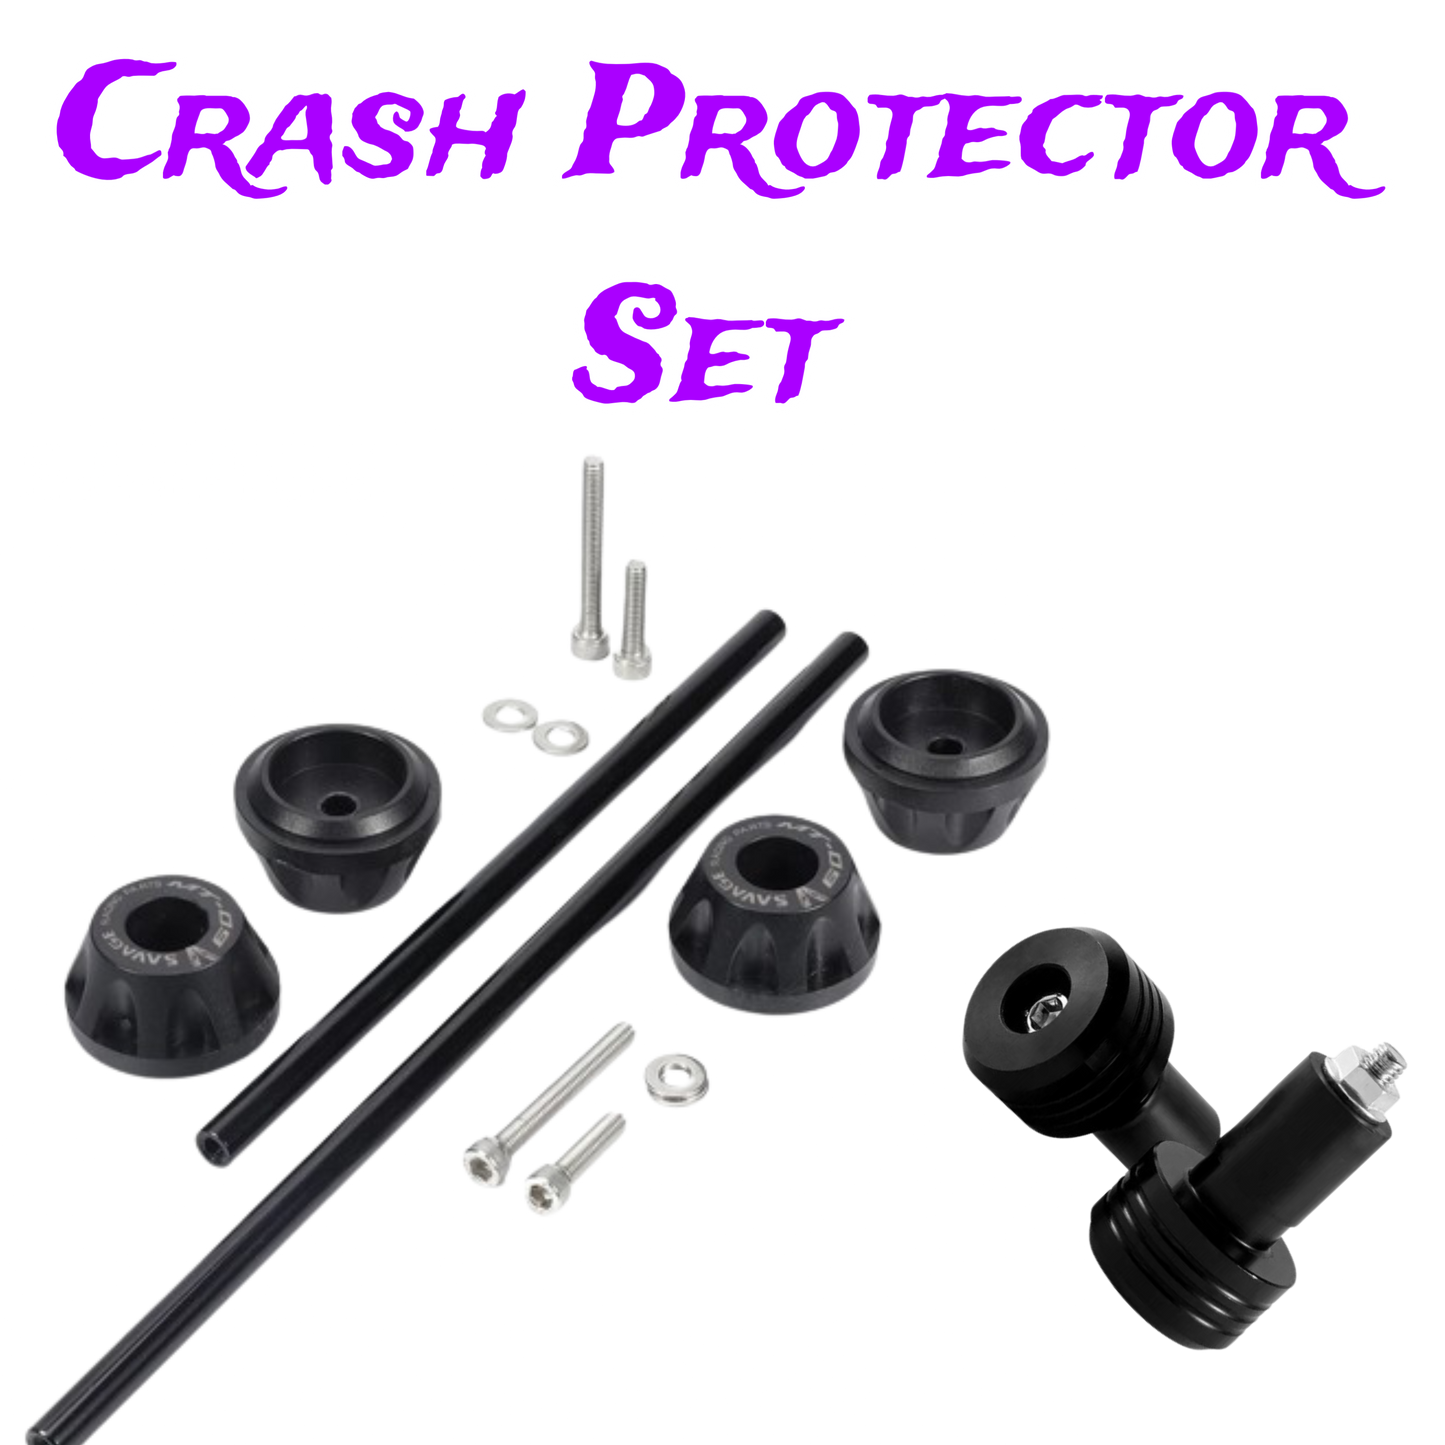 Crash Protection Set